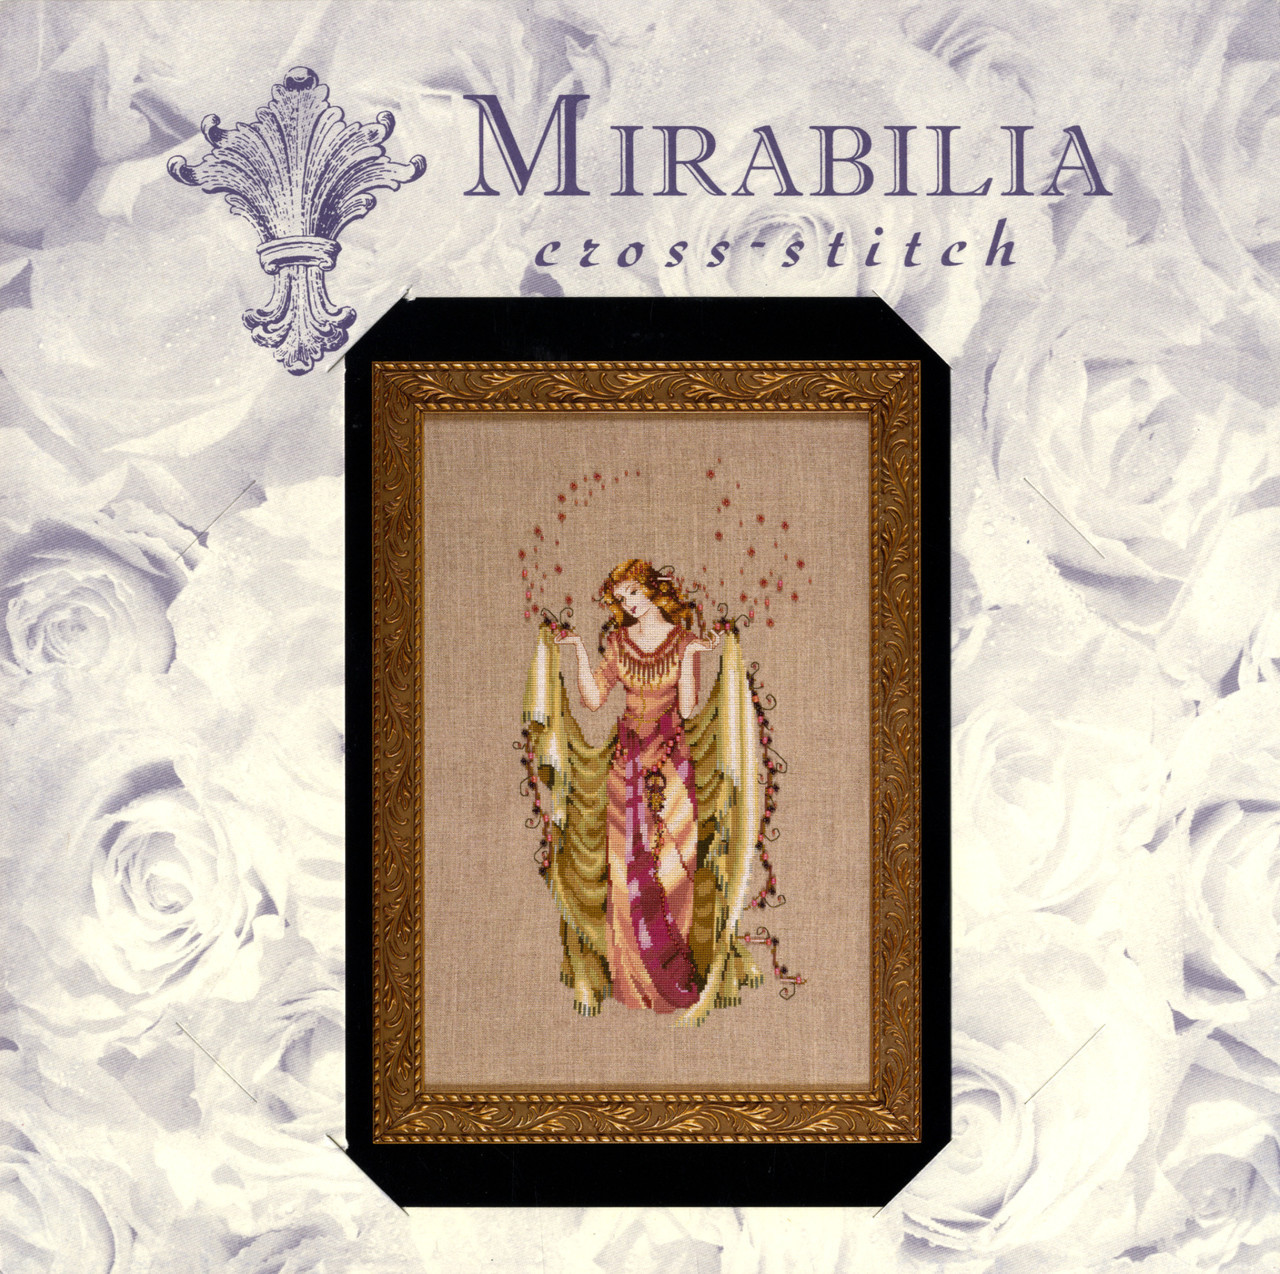 Mirabilia - The Forest Goddess